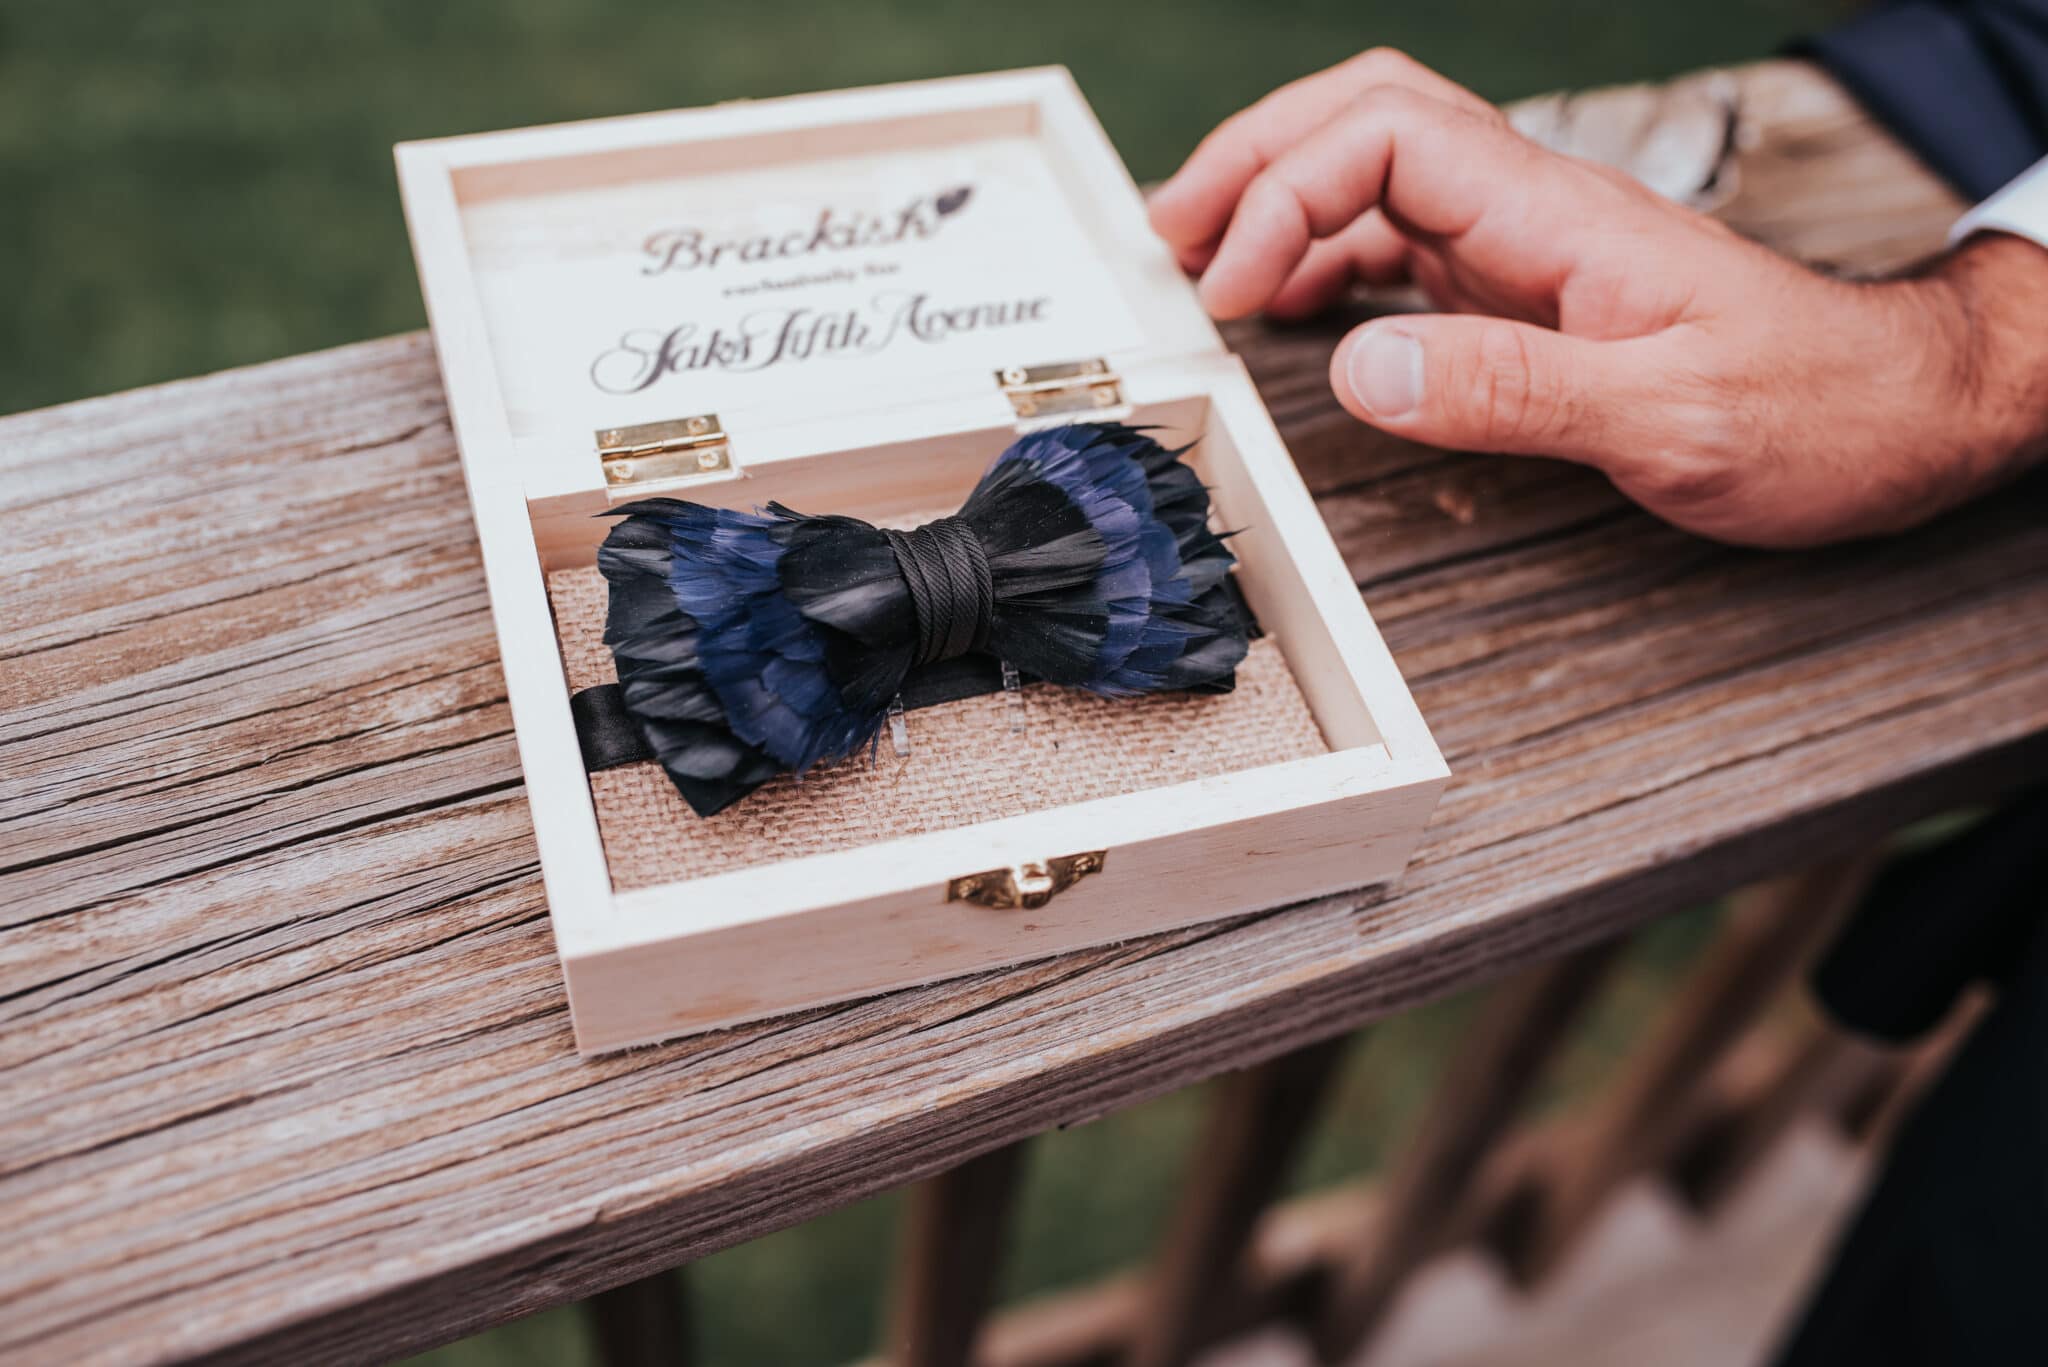 Jaclyn Watson Events • blue wedding •New England wedding planner